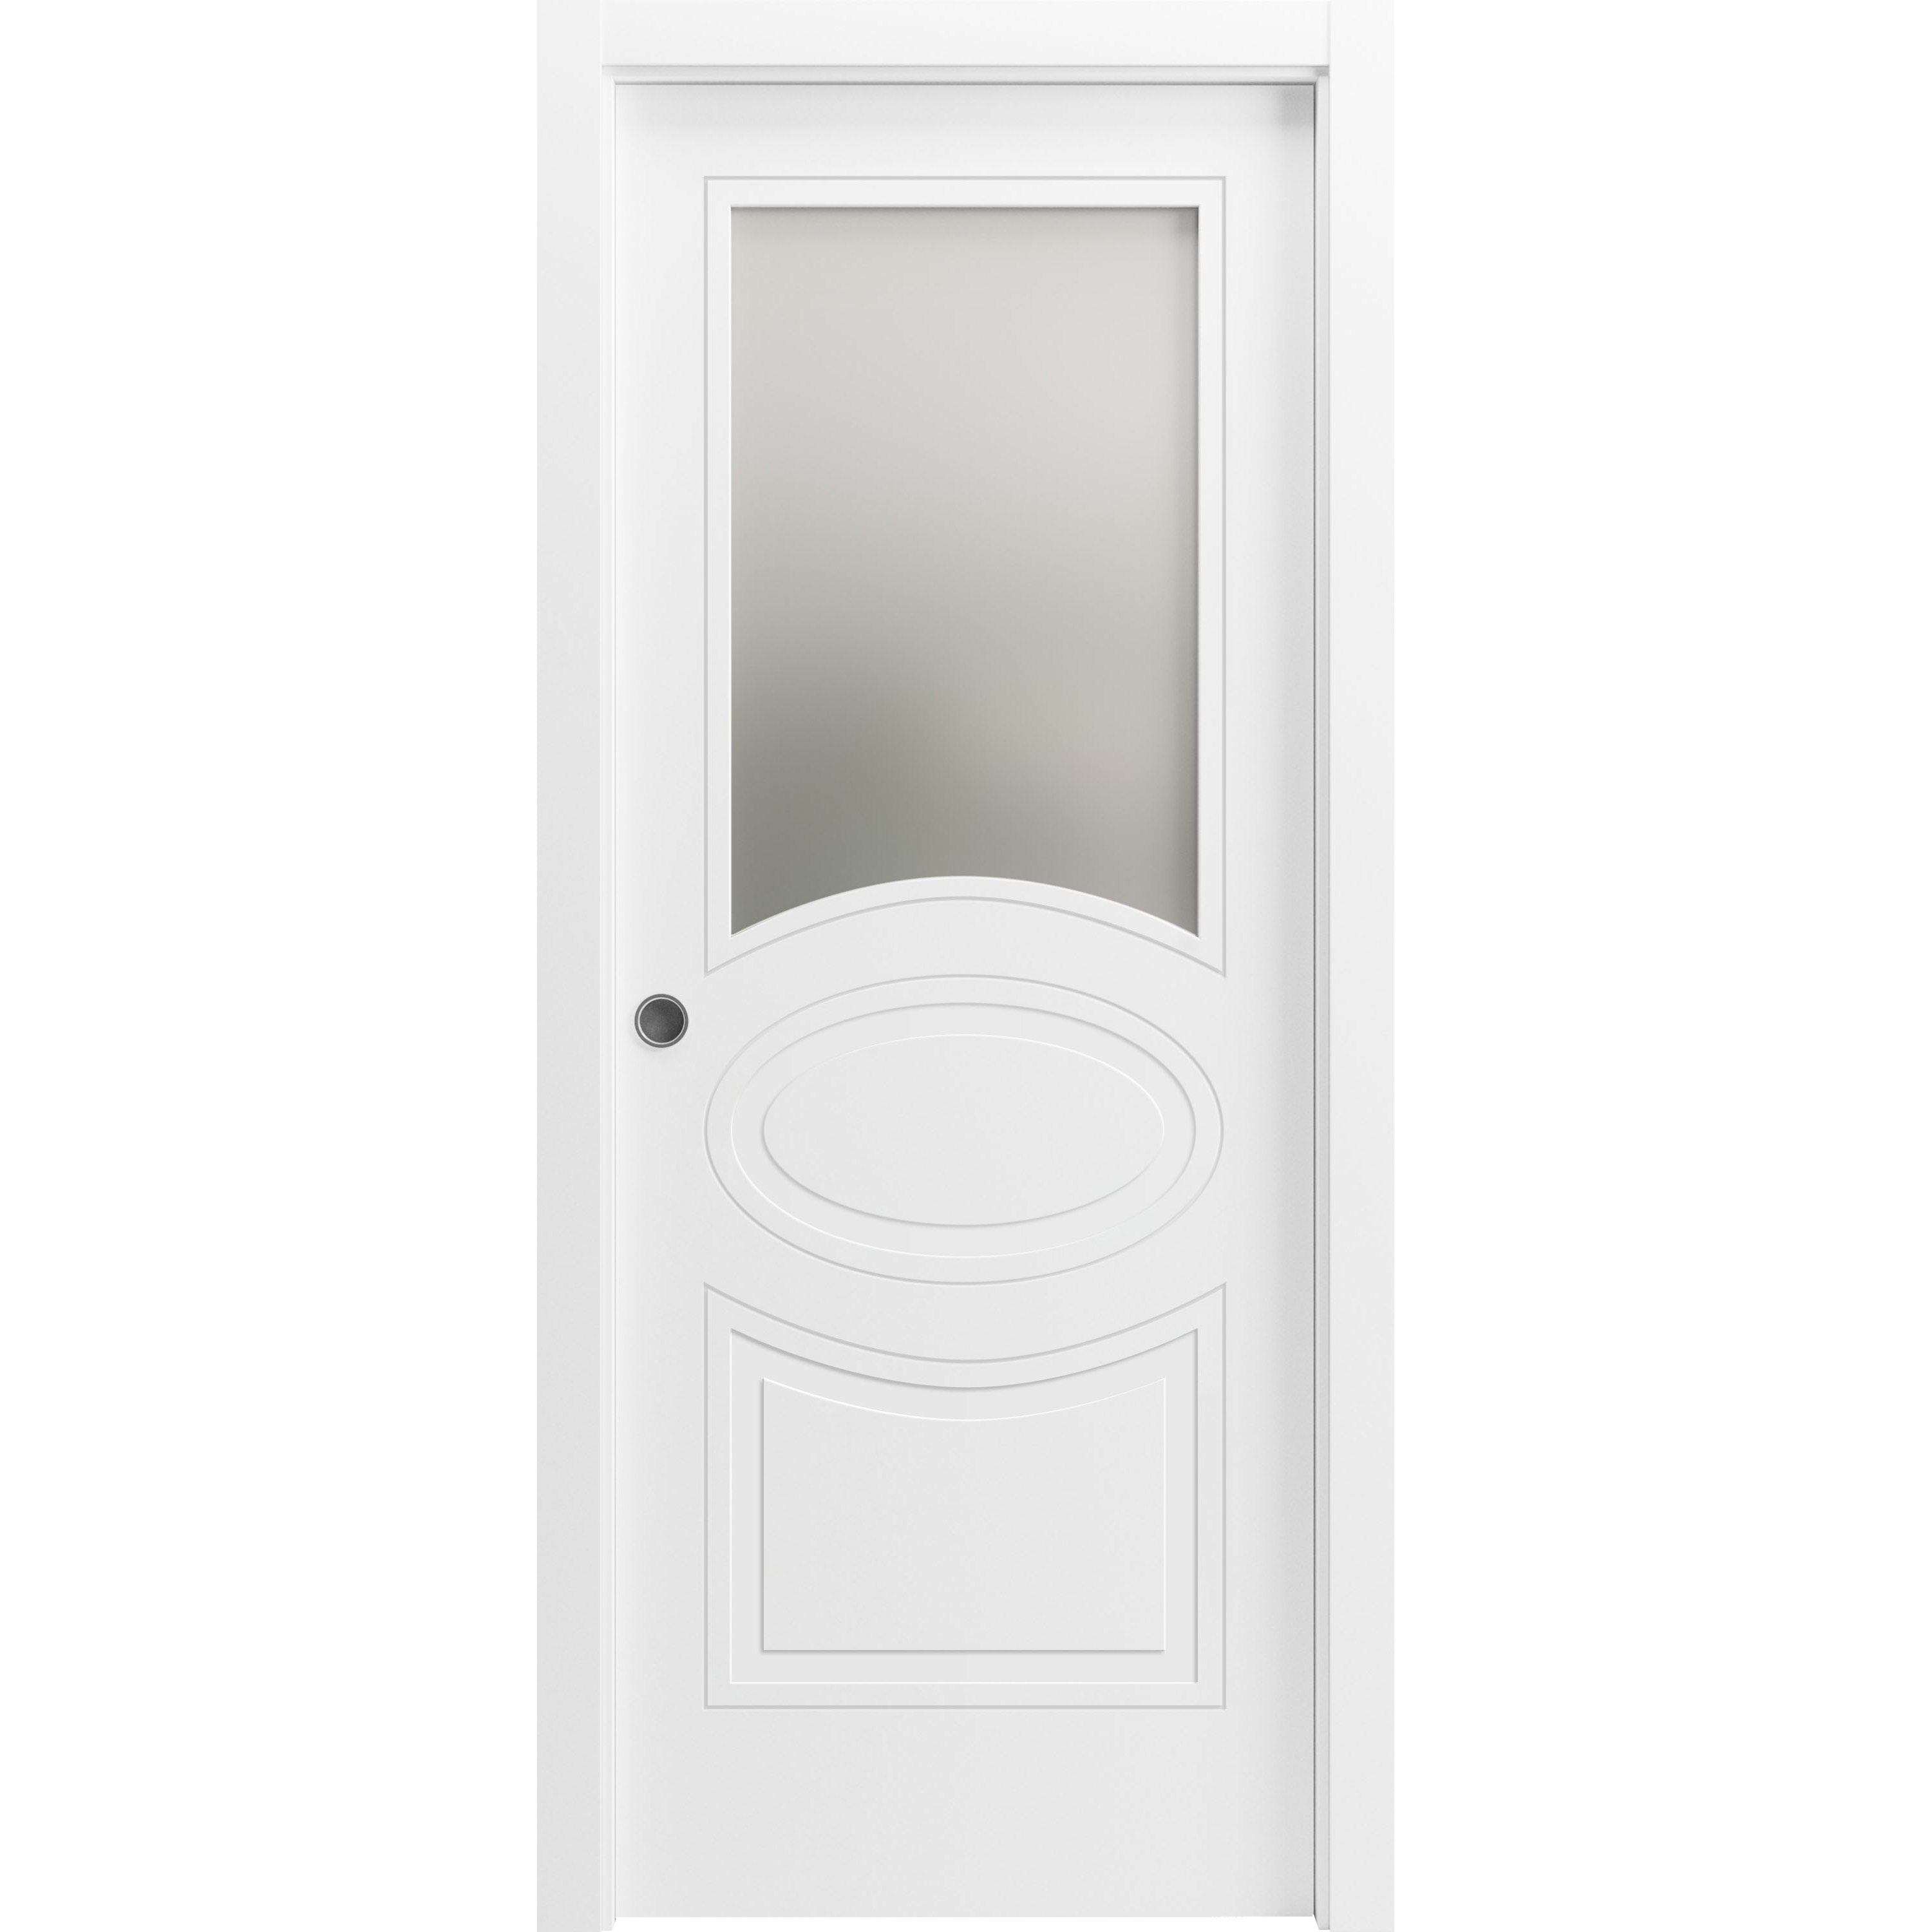 Sliding Pocket Door 28 x 80 inches with Opaque Glass / Mela 7012 Matte White / Kit Rail Hardware / MDF Interior Bedroom Modern Doors